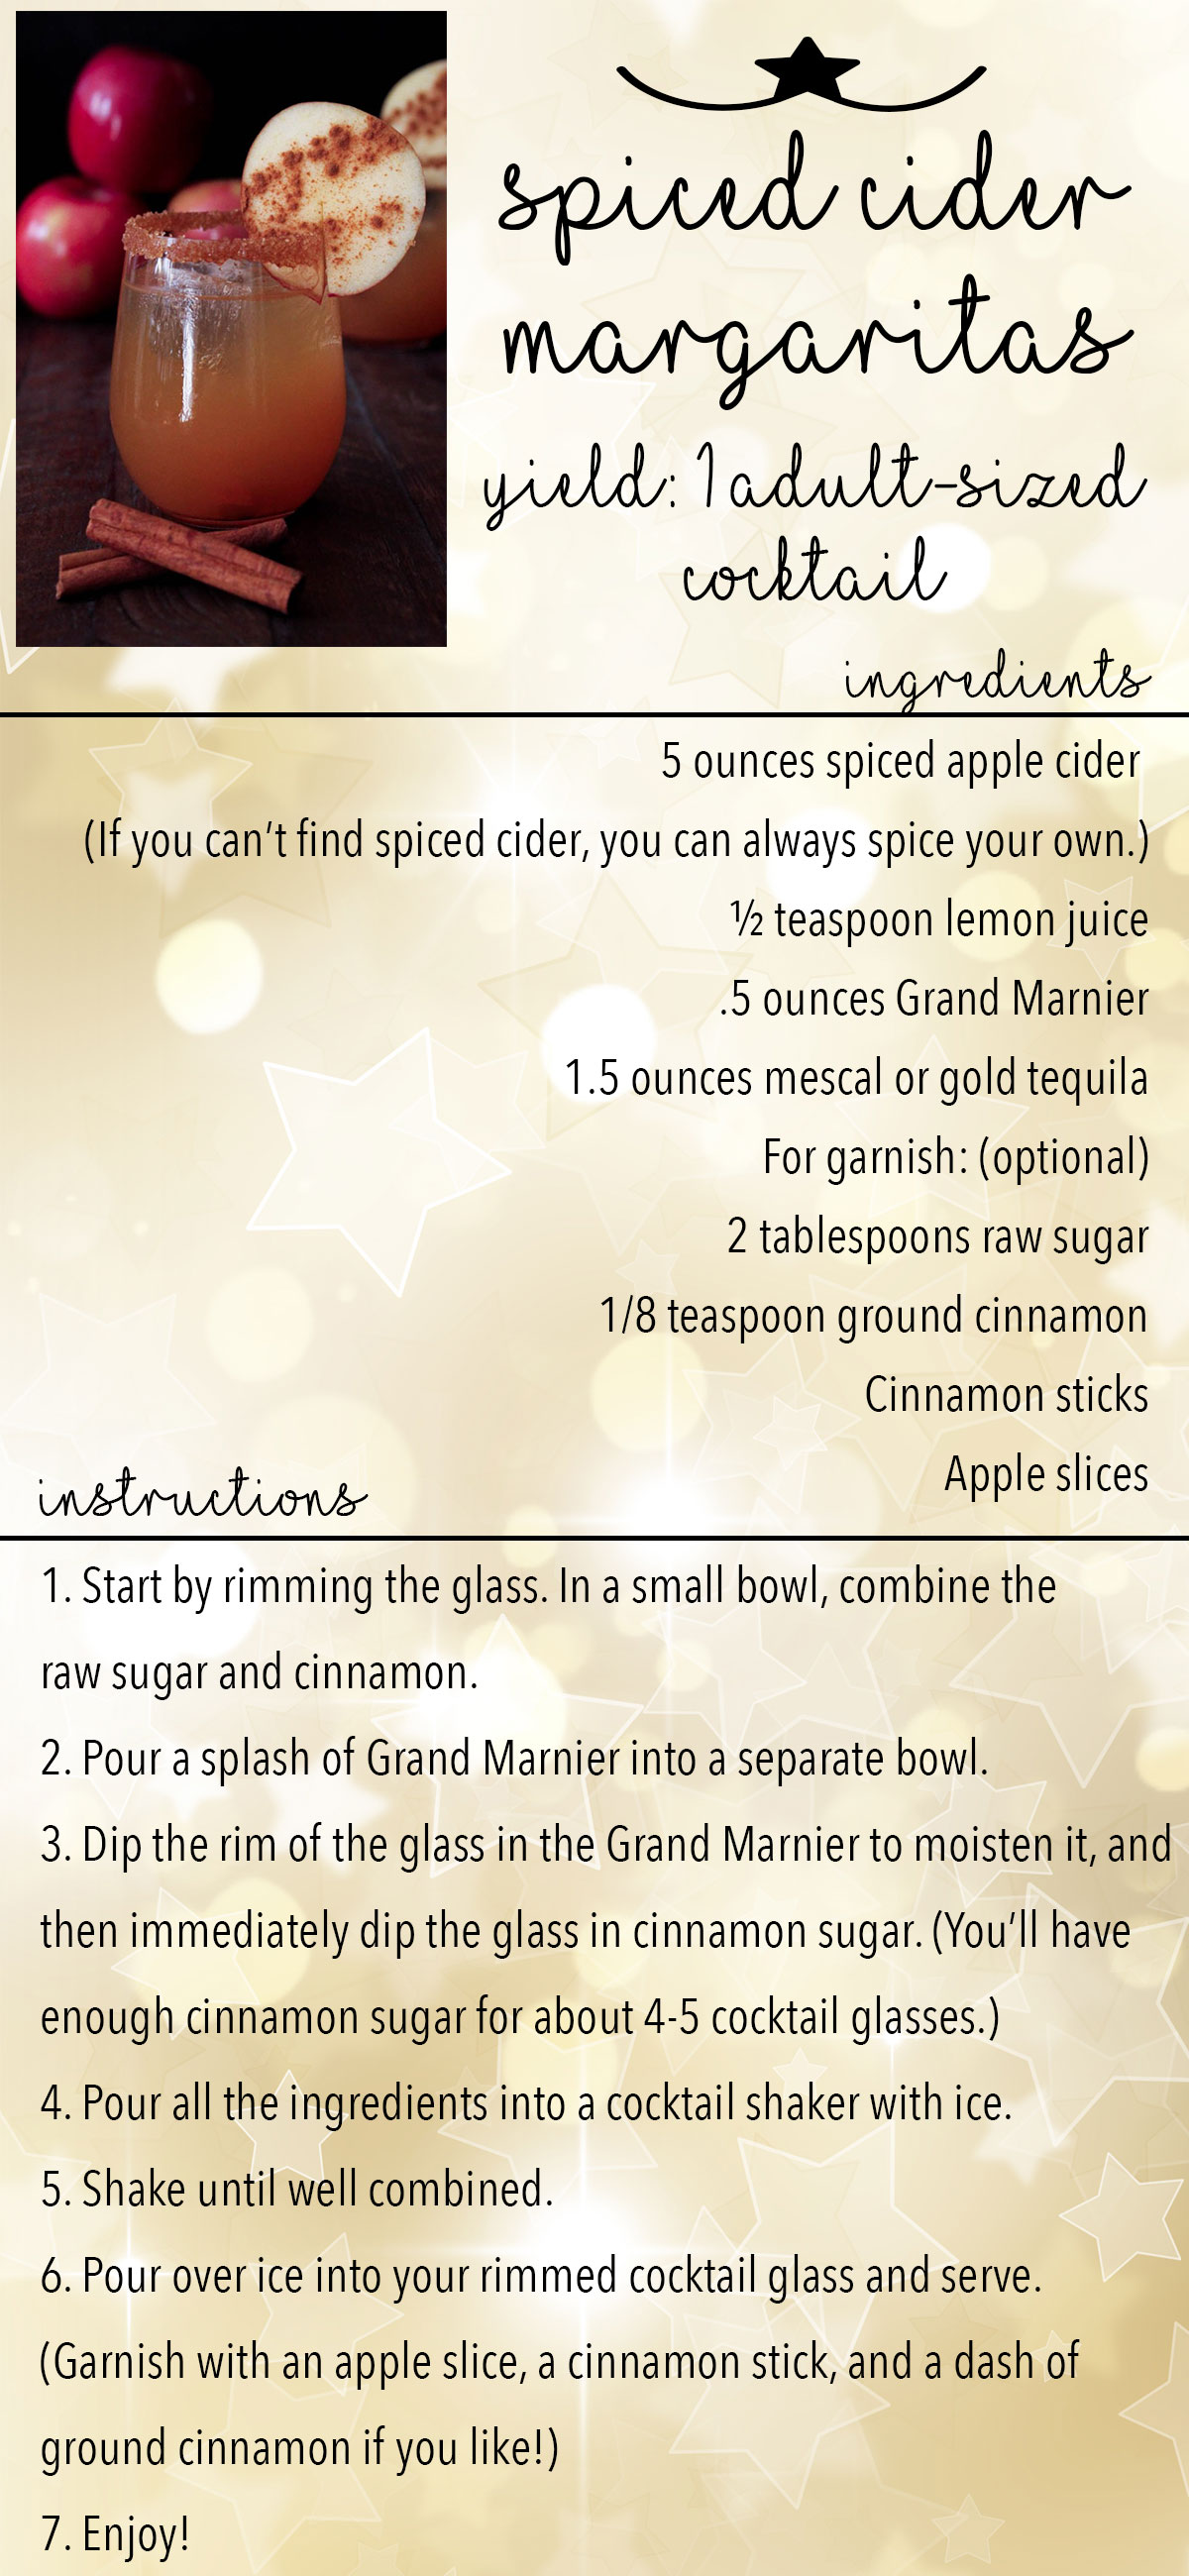 Spiced Cider Margaritas Recipe Card